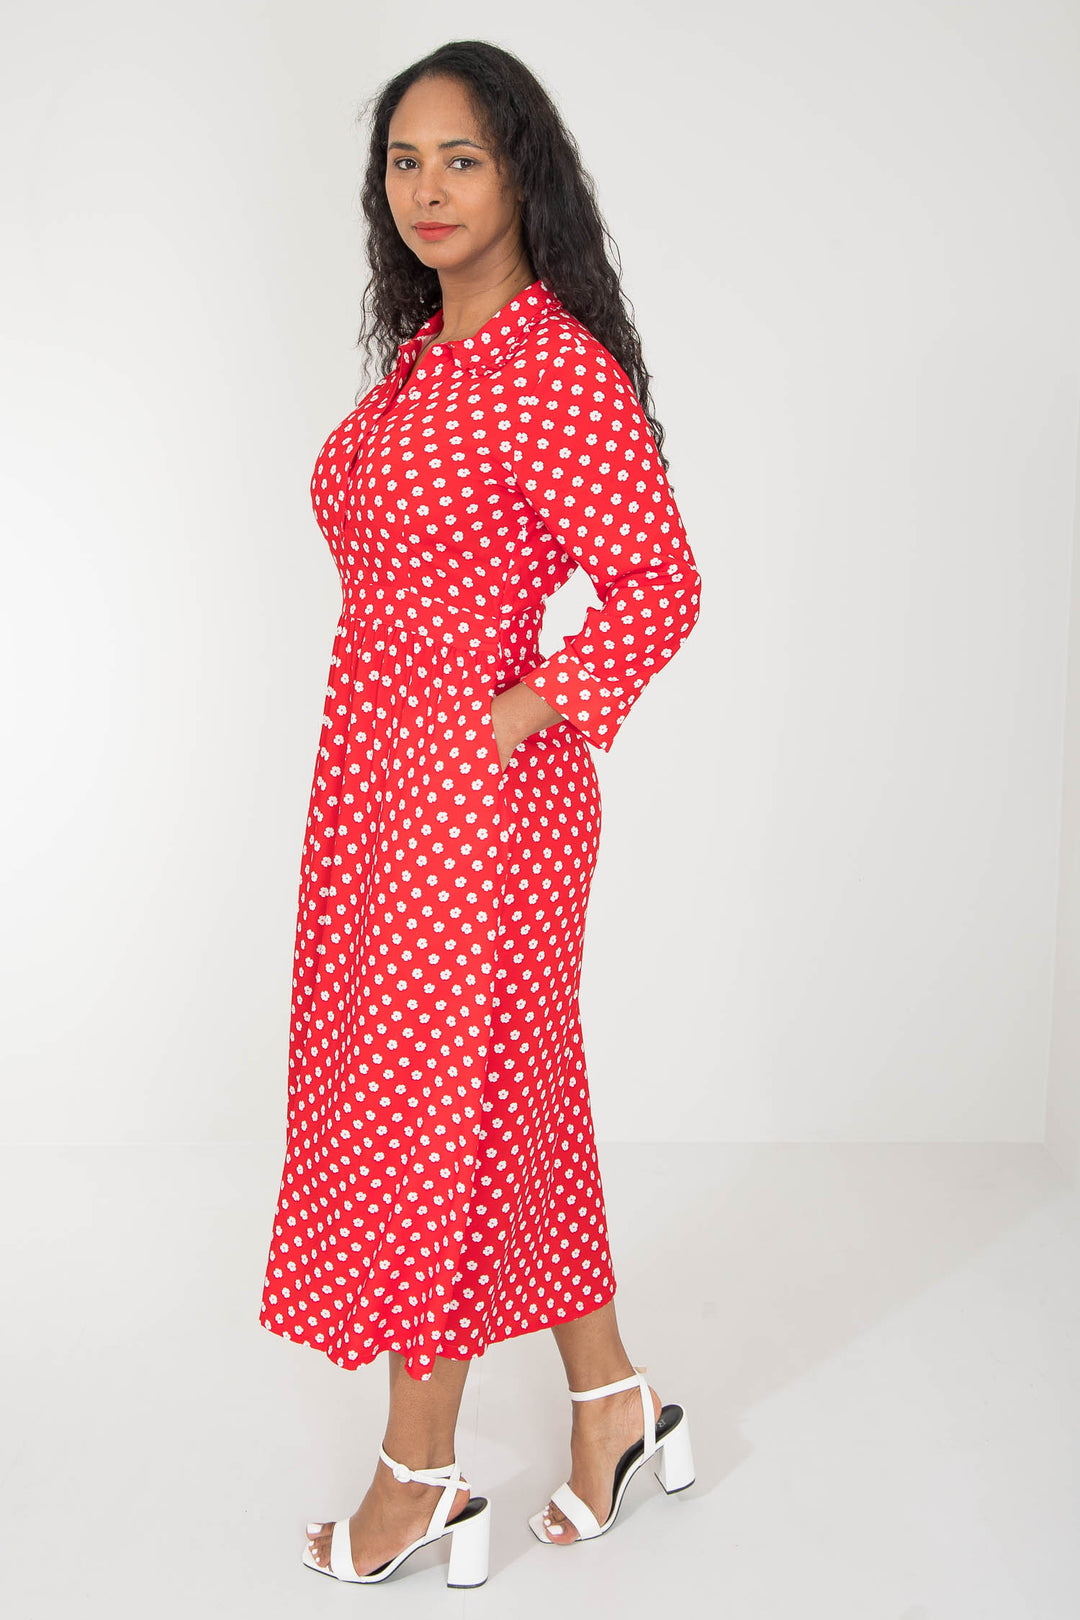 Pure EcoVero woven viscose midi dress - Red flowers - Rød-hvit mønstret lårkort skjortekjole 